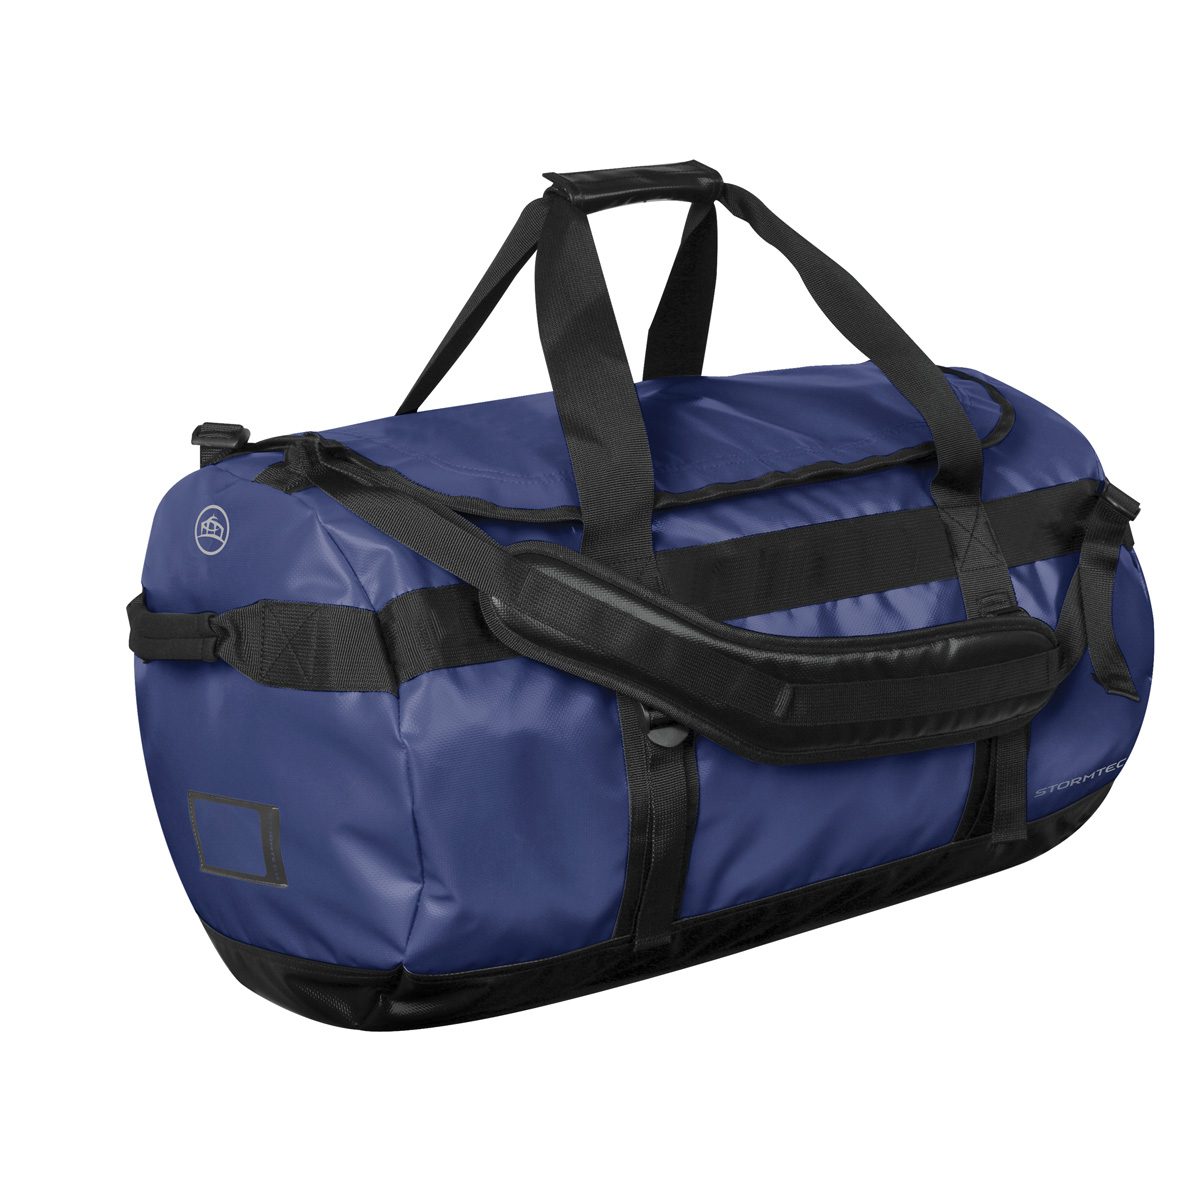 Stormtech Atlantis Waterproof Gear Bag - Large #GBW-1LLE Ocean Blue